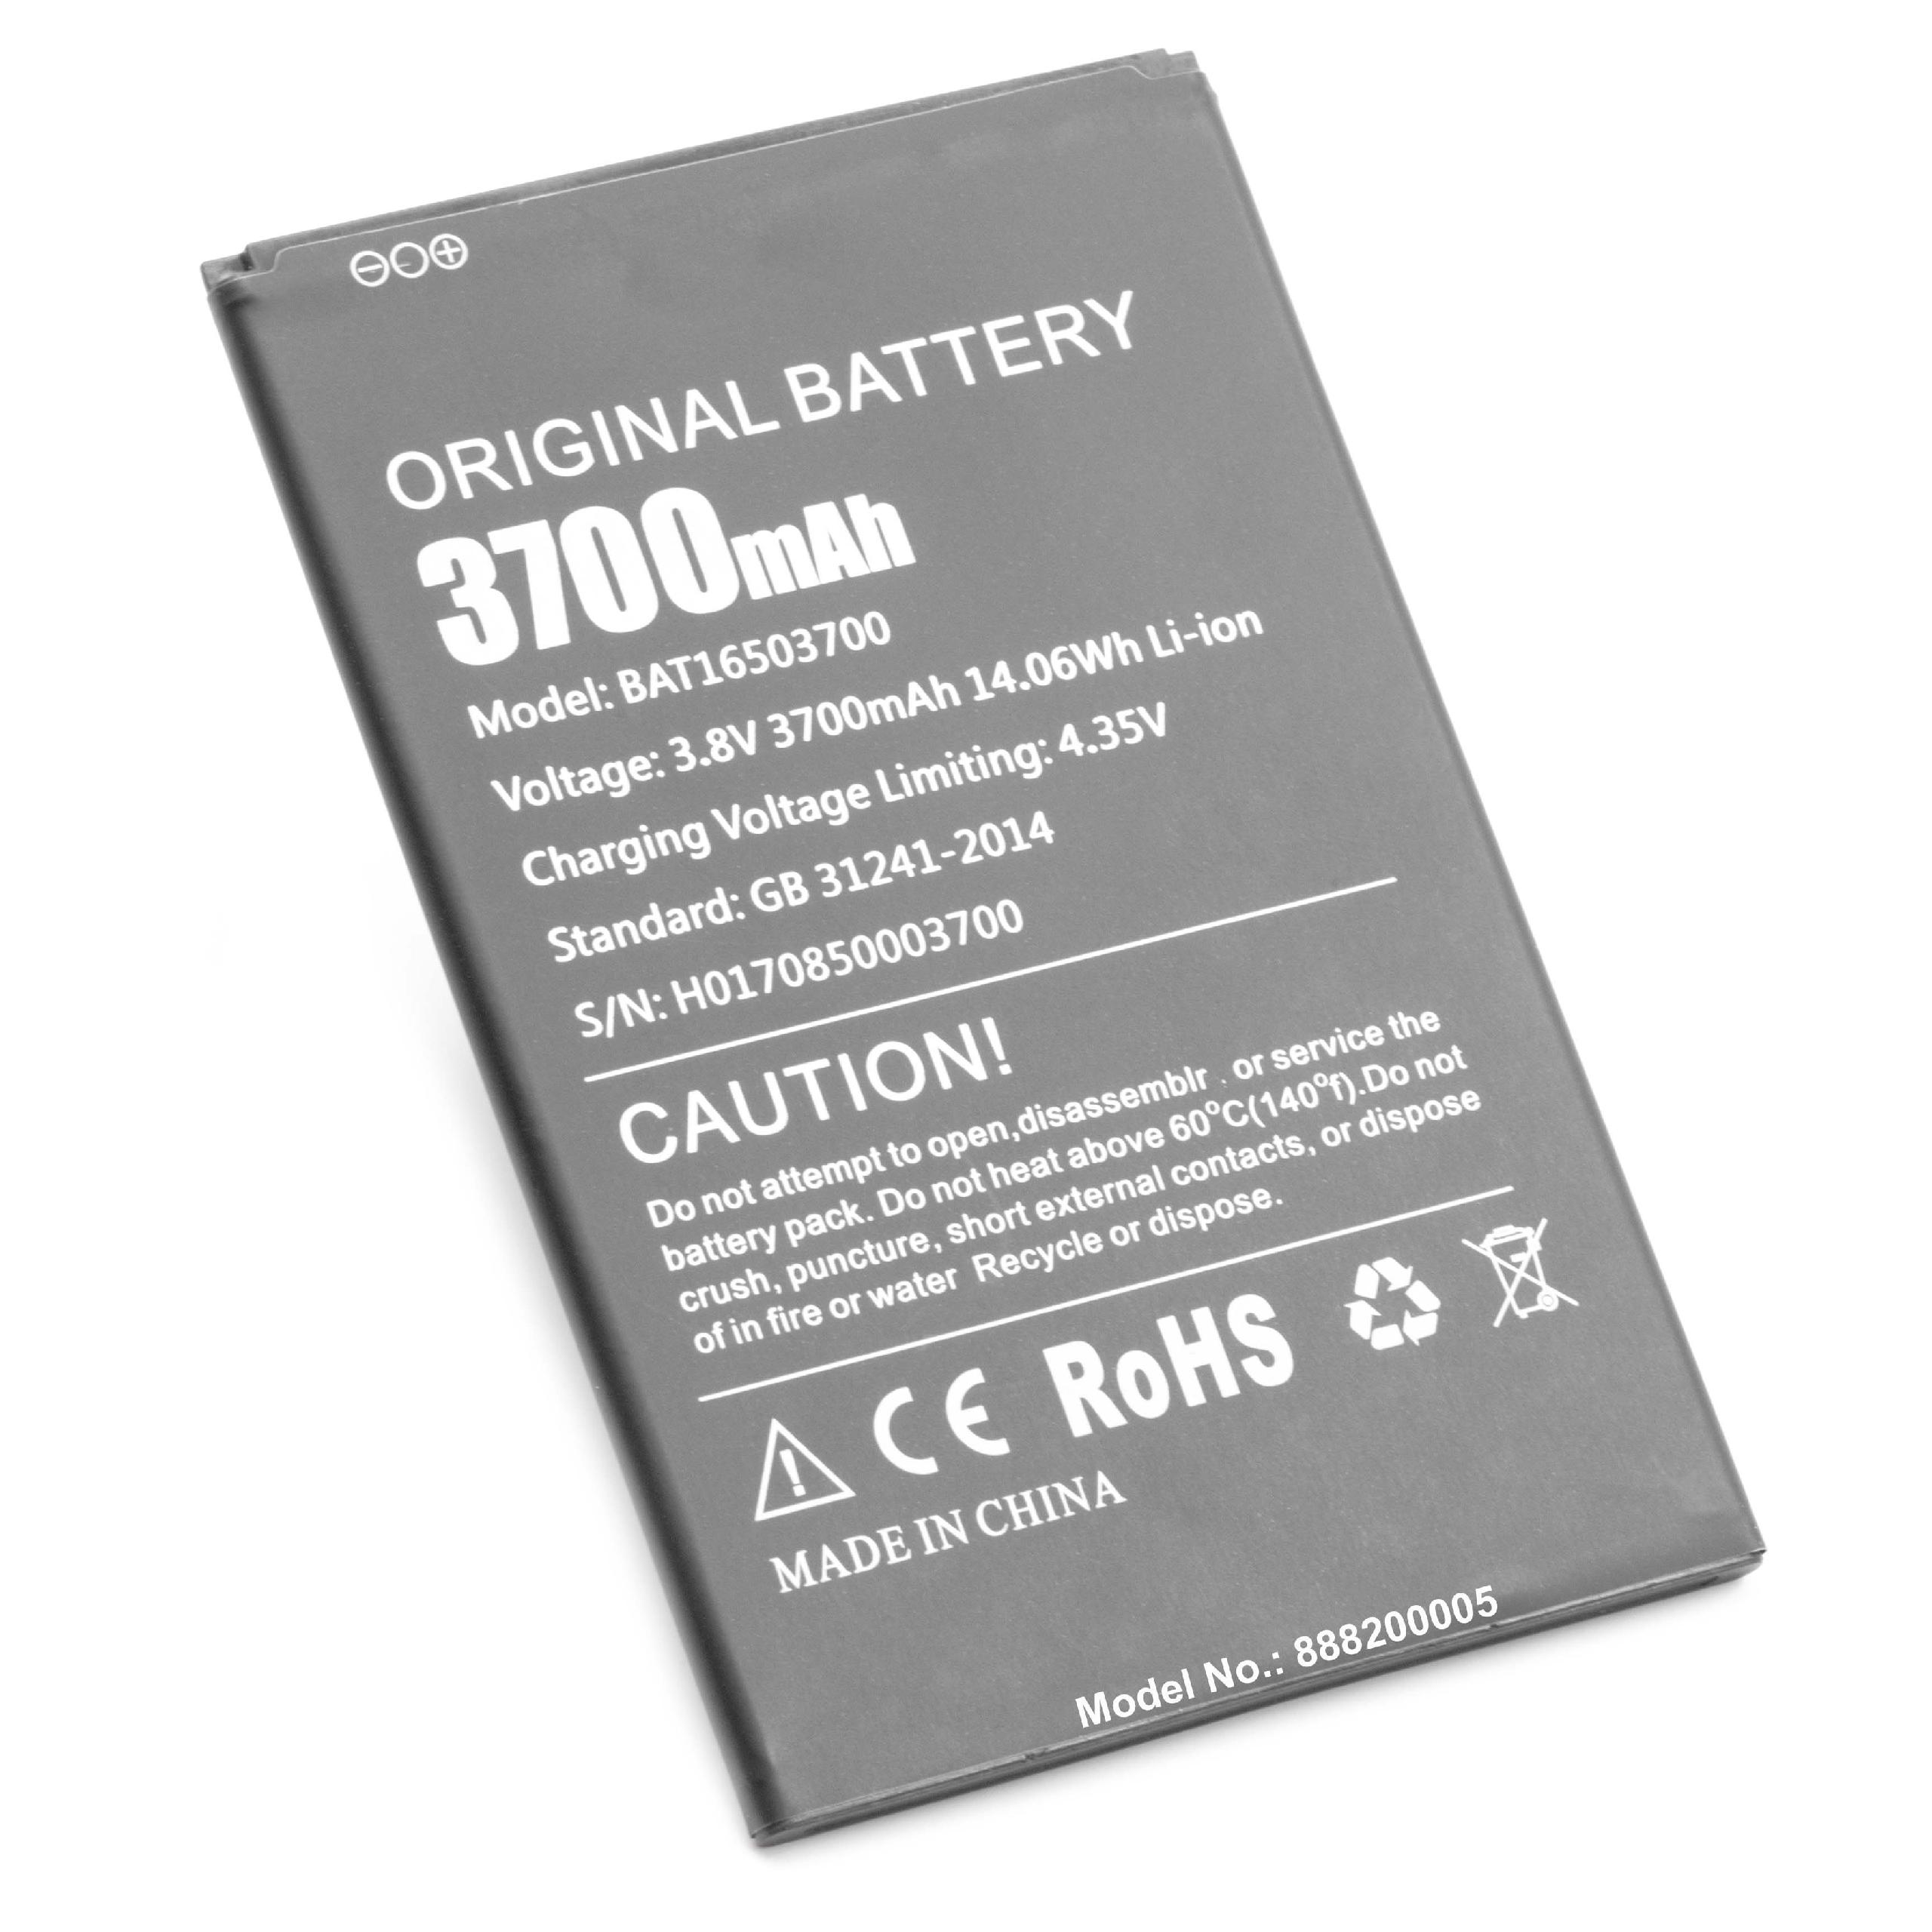 Batería reemplaza Doogee BAT16503700 para móvil, teléfono Doogee - 3700 mAh 3,8 V Li-Ion